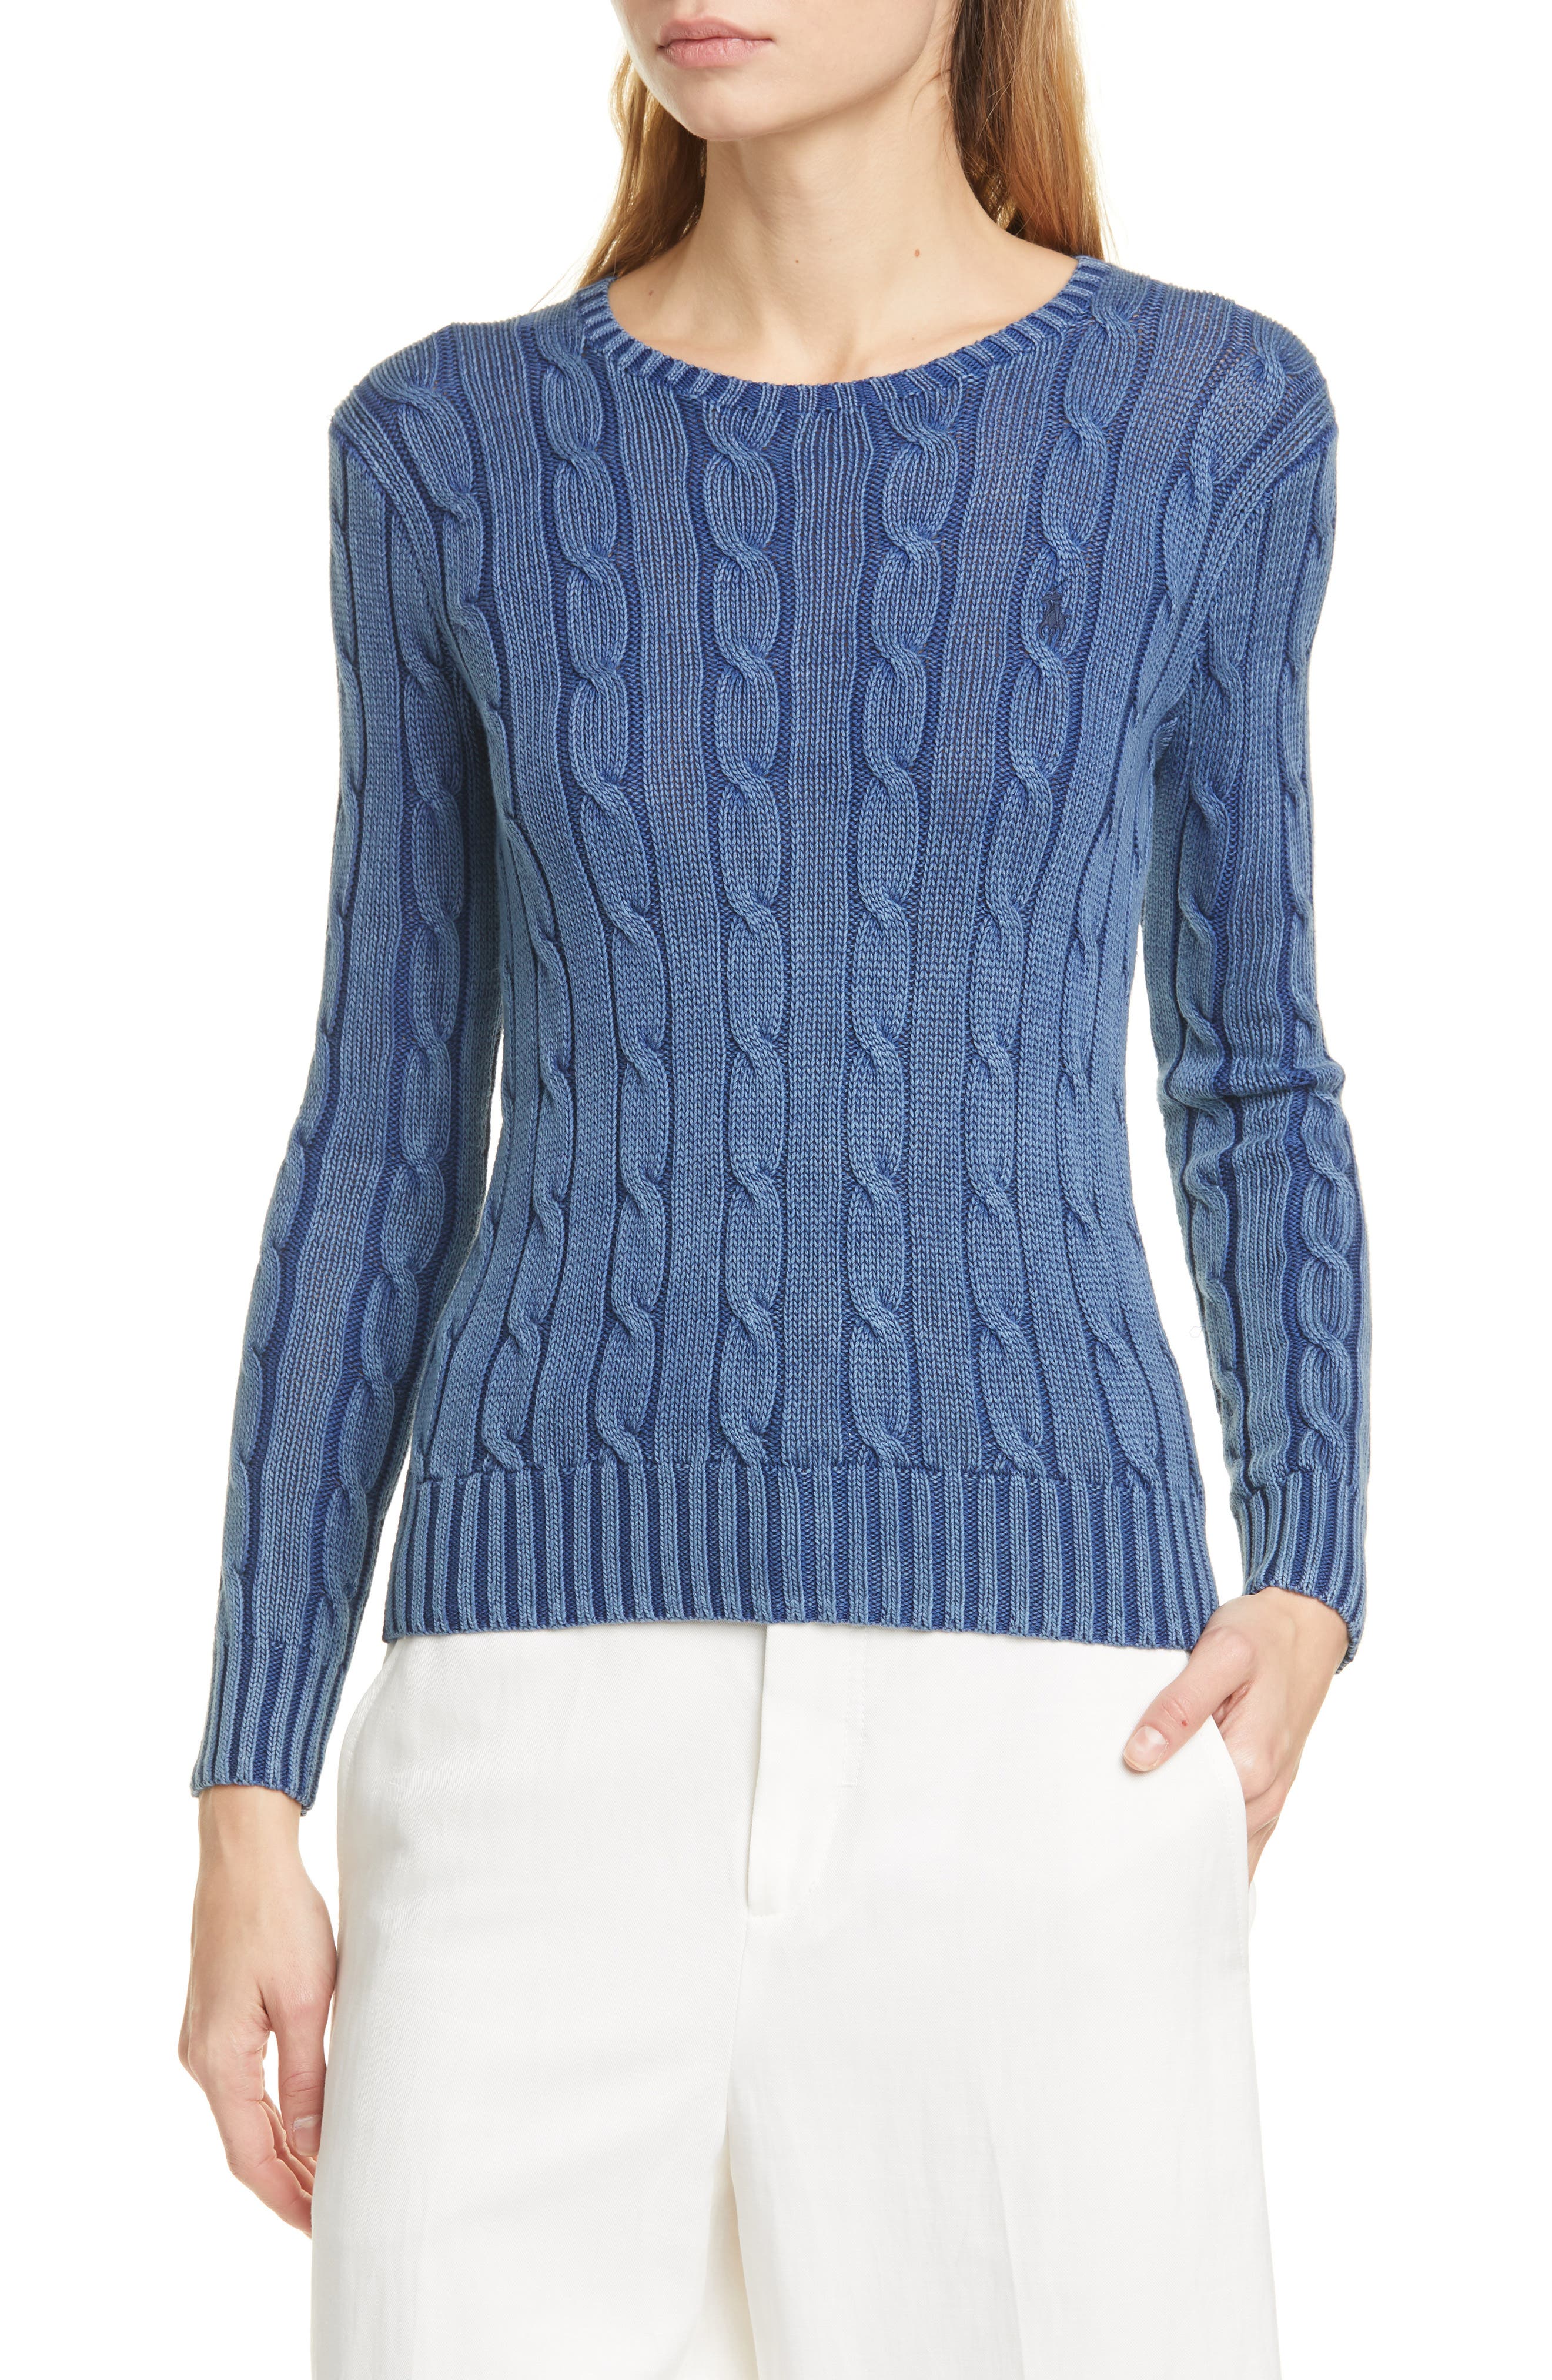 ralph lauren cable knit sweater womens